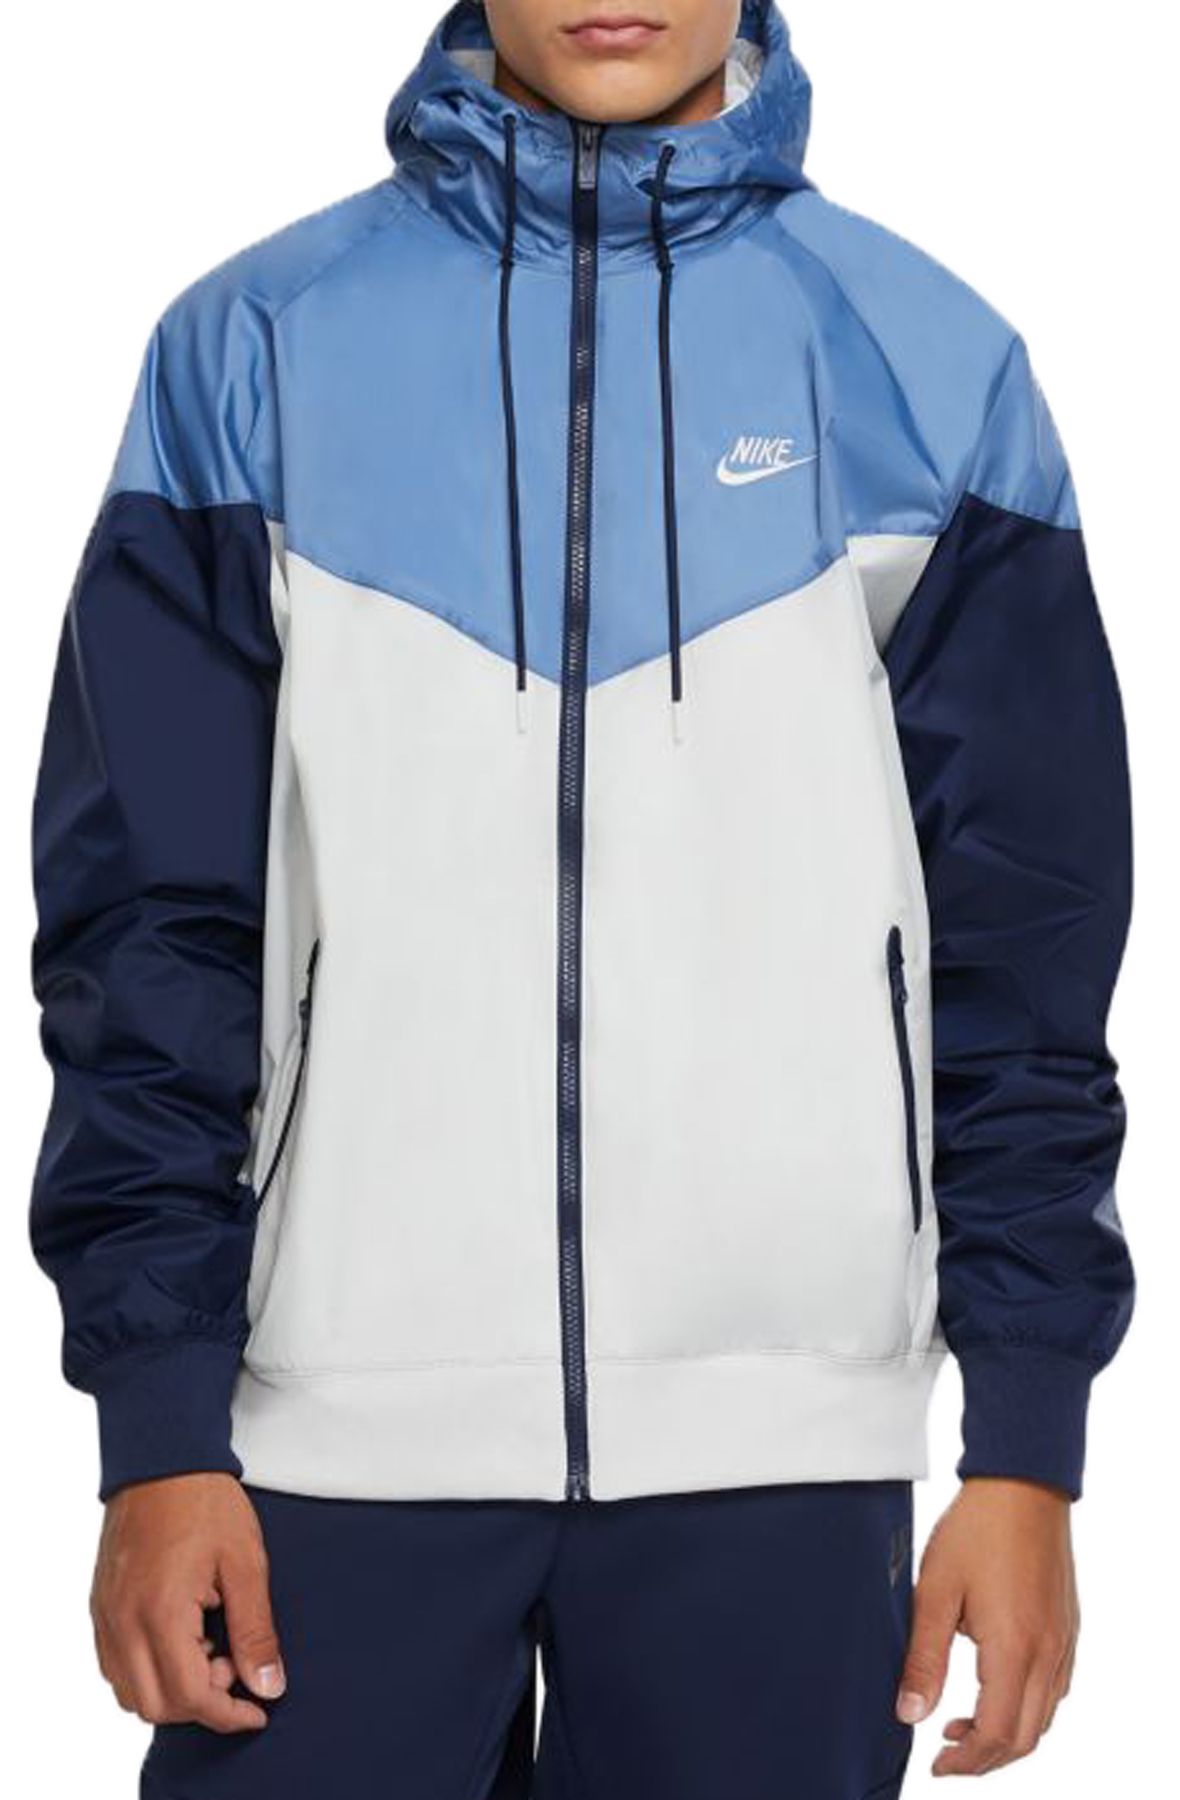 NIKE Sportswear Windrunner Jacket AR2191 028 - Shiekh